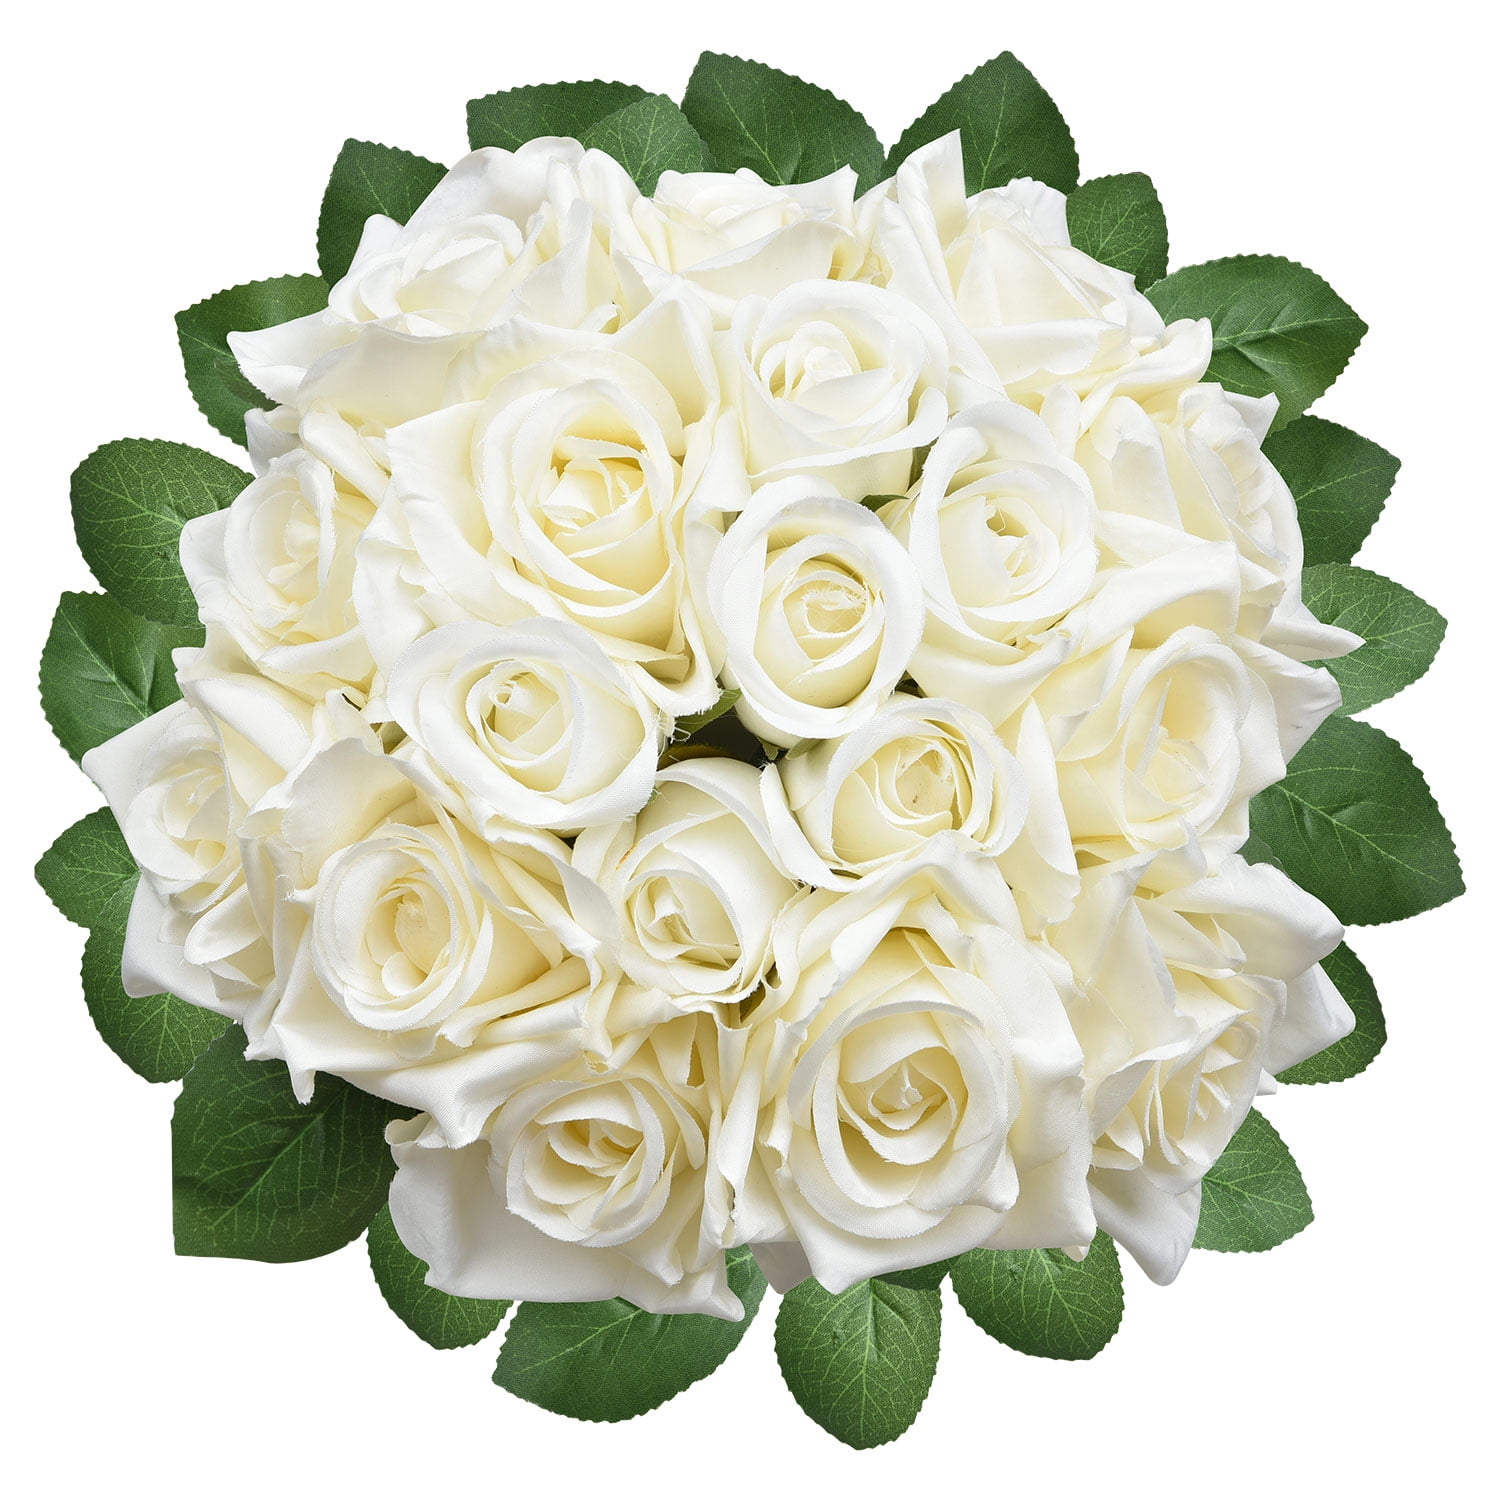 WEDDINGS CORAL FOAM ROSE BUTTONHOLE ARTIFICIAL SINGLE FLOWER 